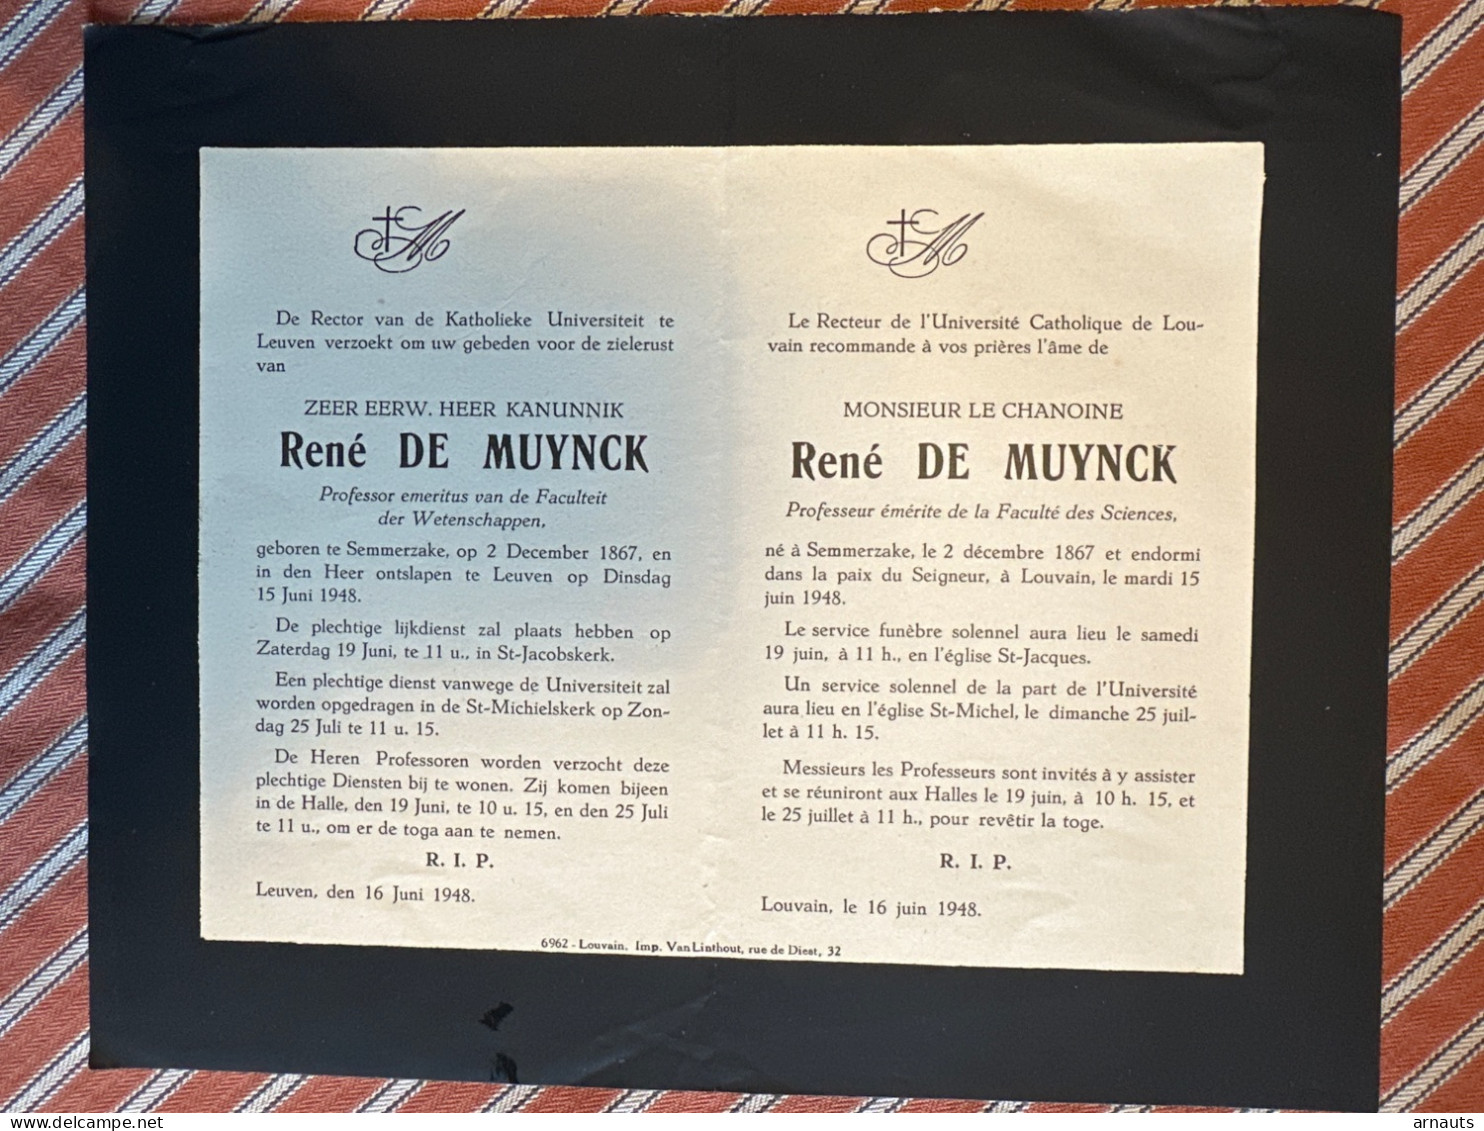 Rector Kath Univ Leuven Verzoekt Gebed Kanunnik Rene De Muynck Professor Faculteit Wetenschappen *1867 Semmerzake +1948 - Décès